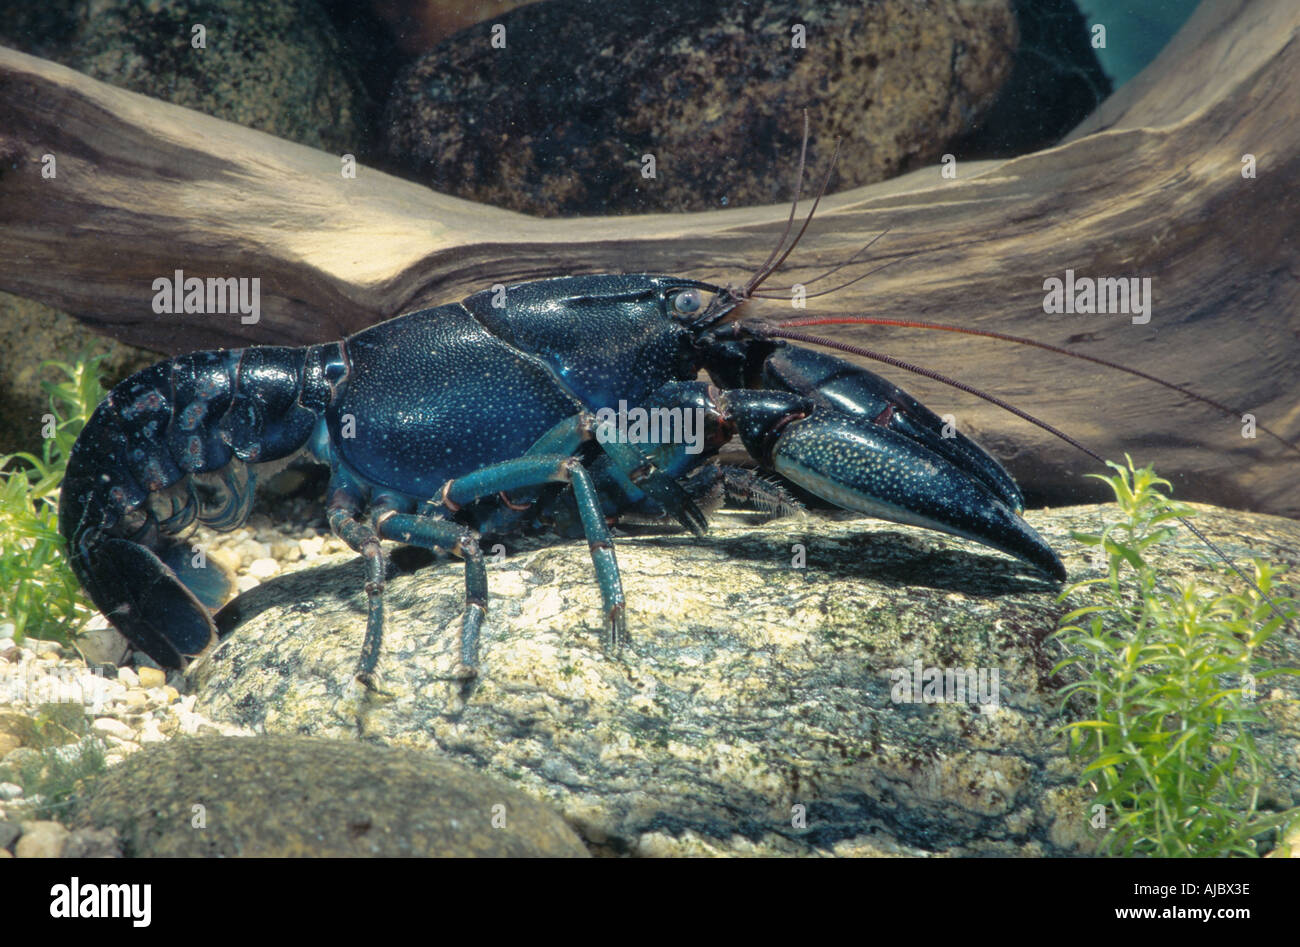 Australian crayfish (Cherax pressii), side view, Australia Stock Photo